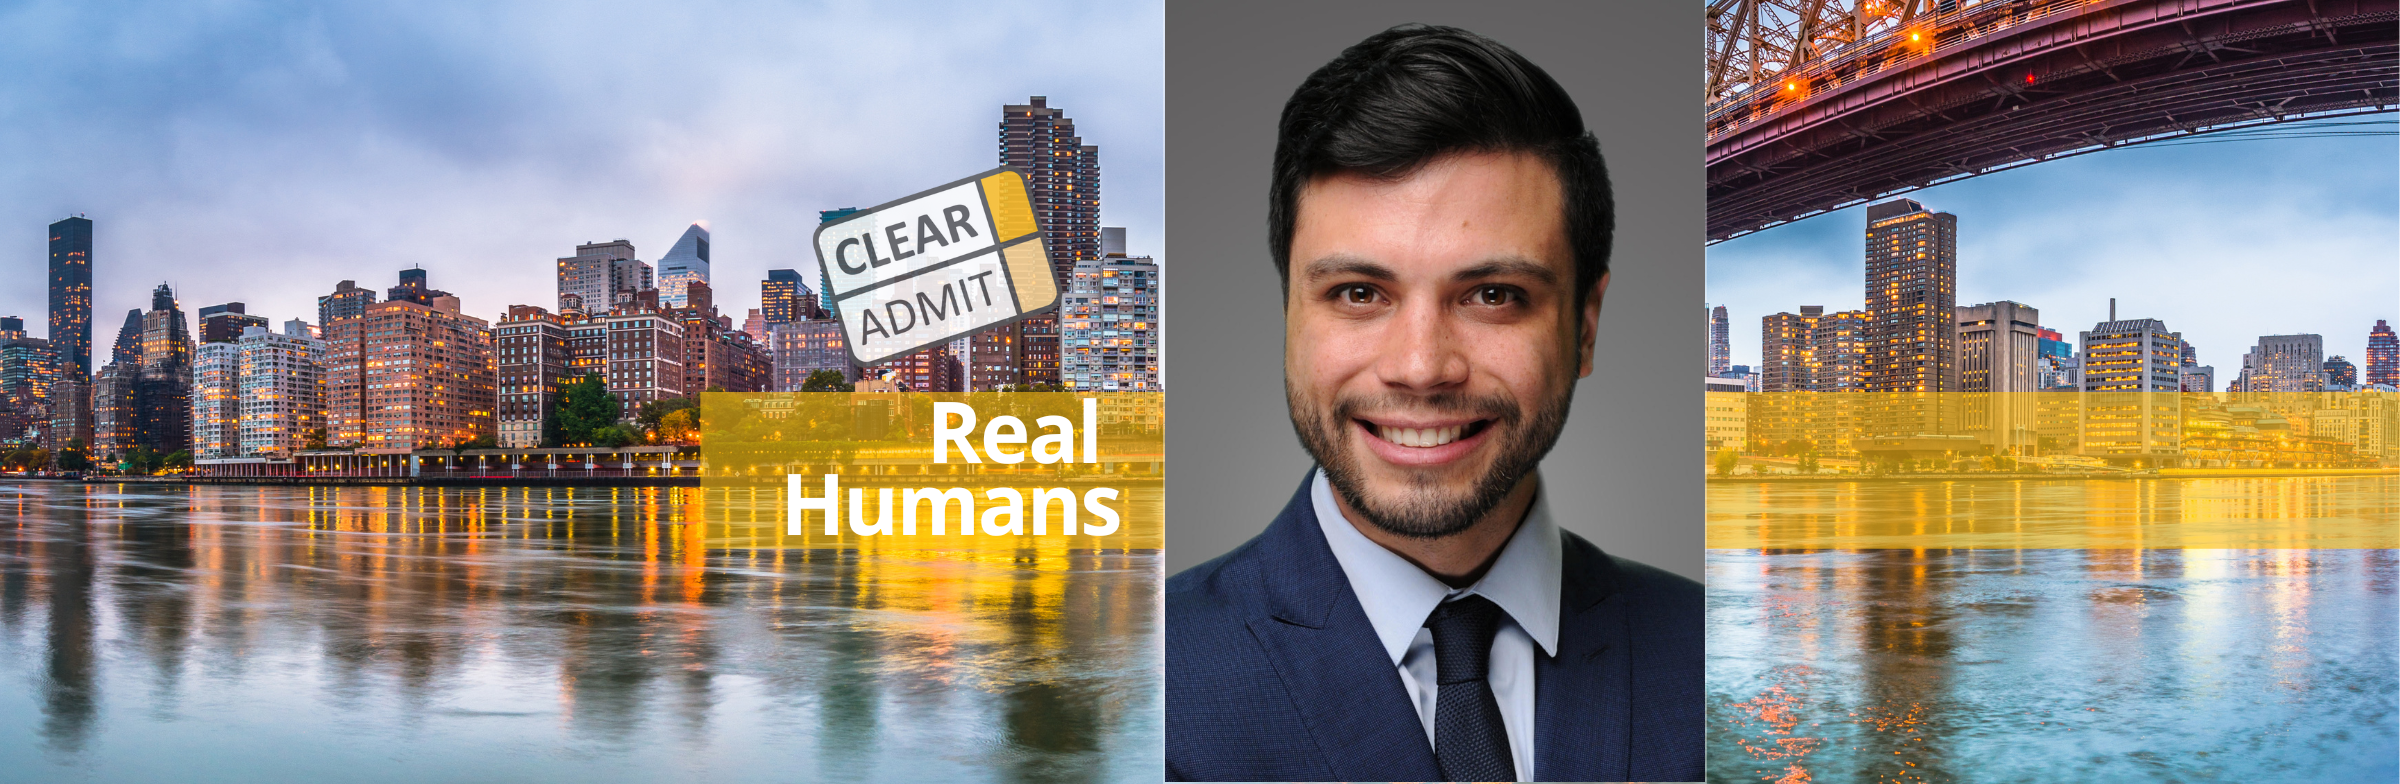 Image for Real Humans of Google: Sebastian Hooker, NYU Stern Tech MBA ’19, Senior Customer Engineer